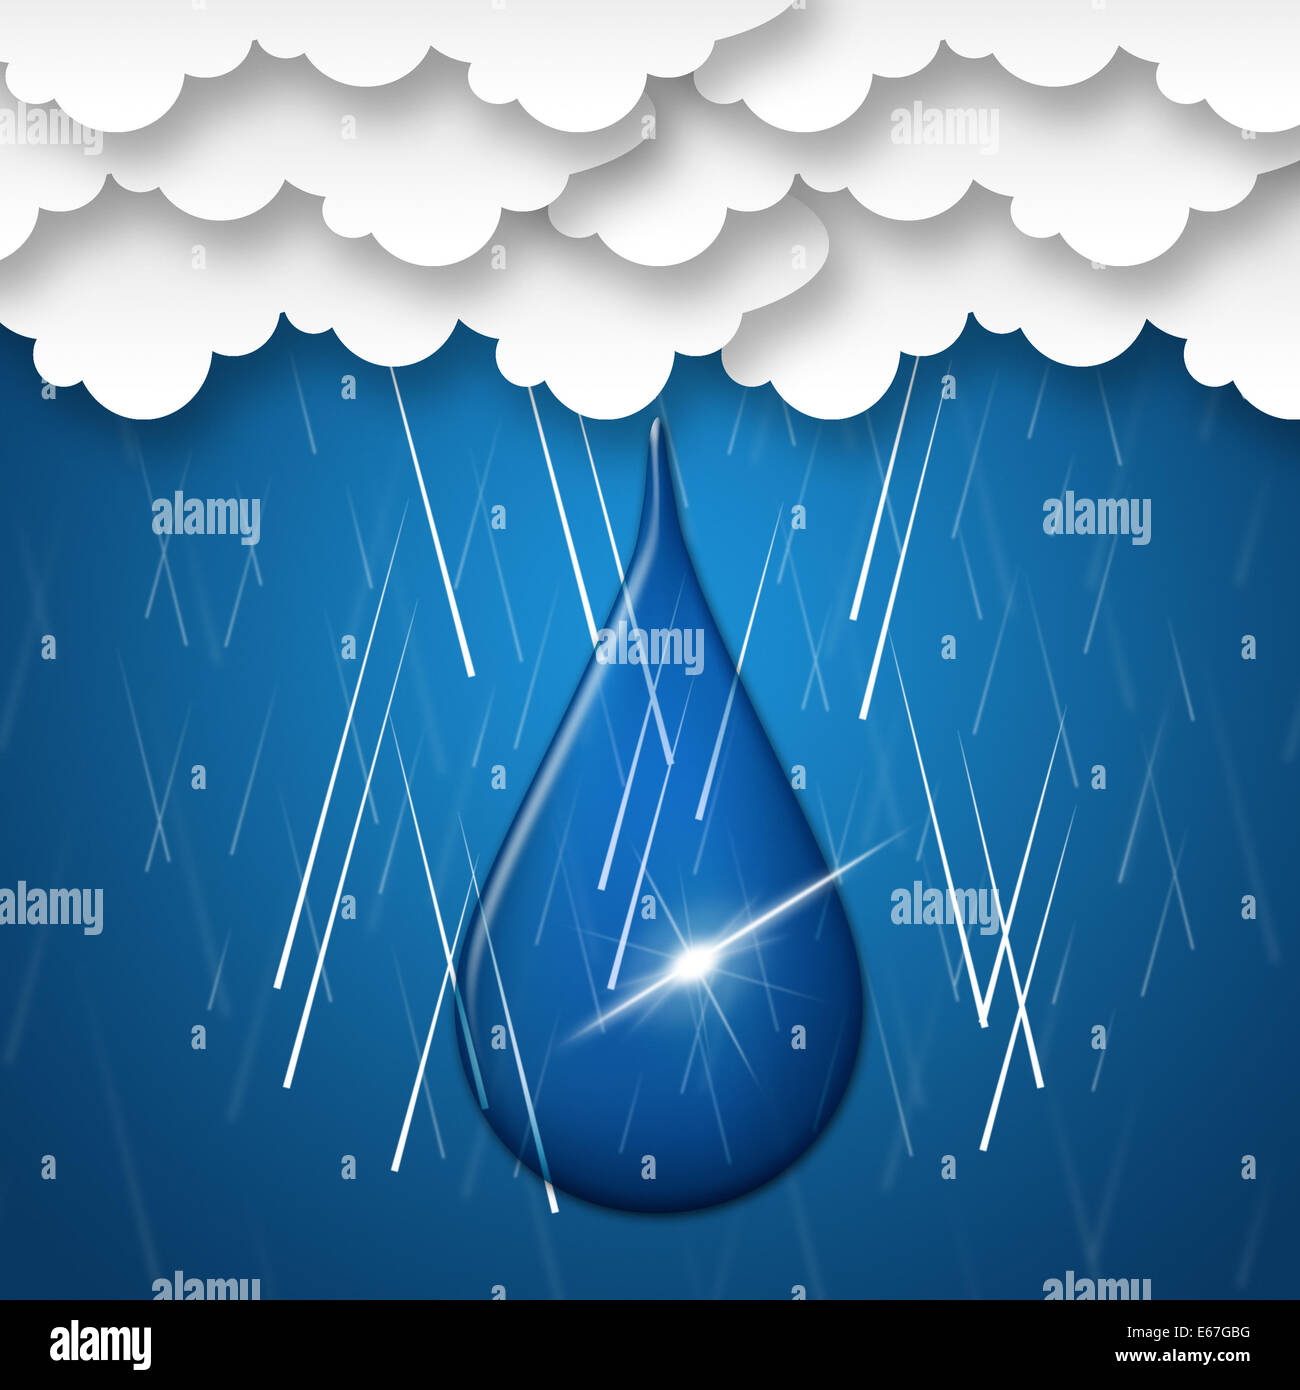 Rain Drop Representing Washing Line And Hanging Stock Photo